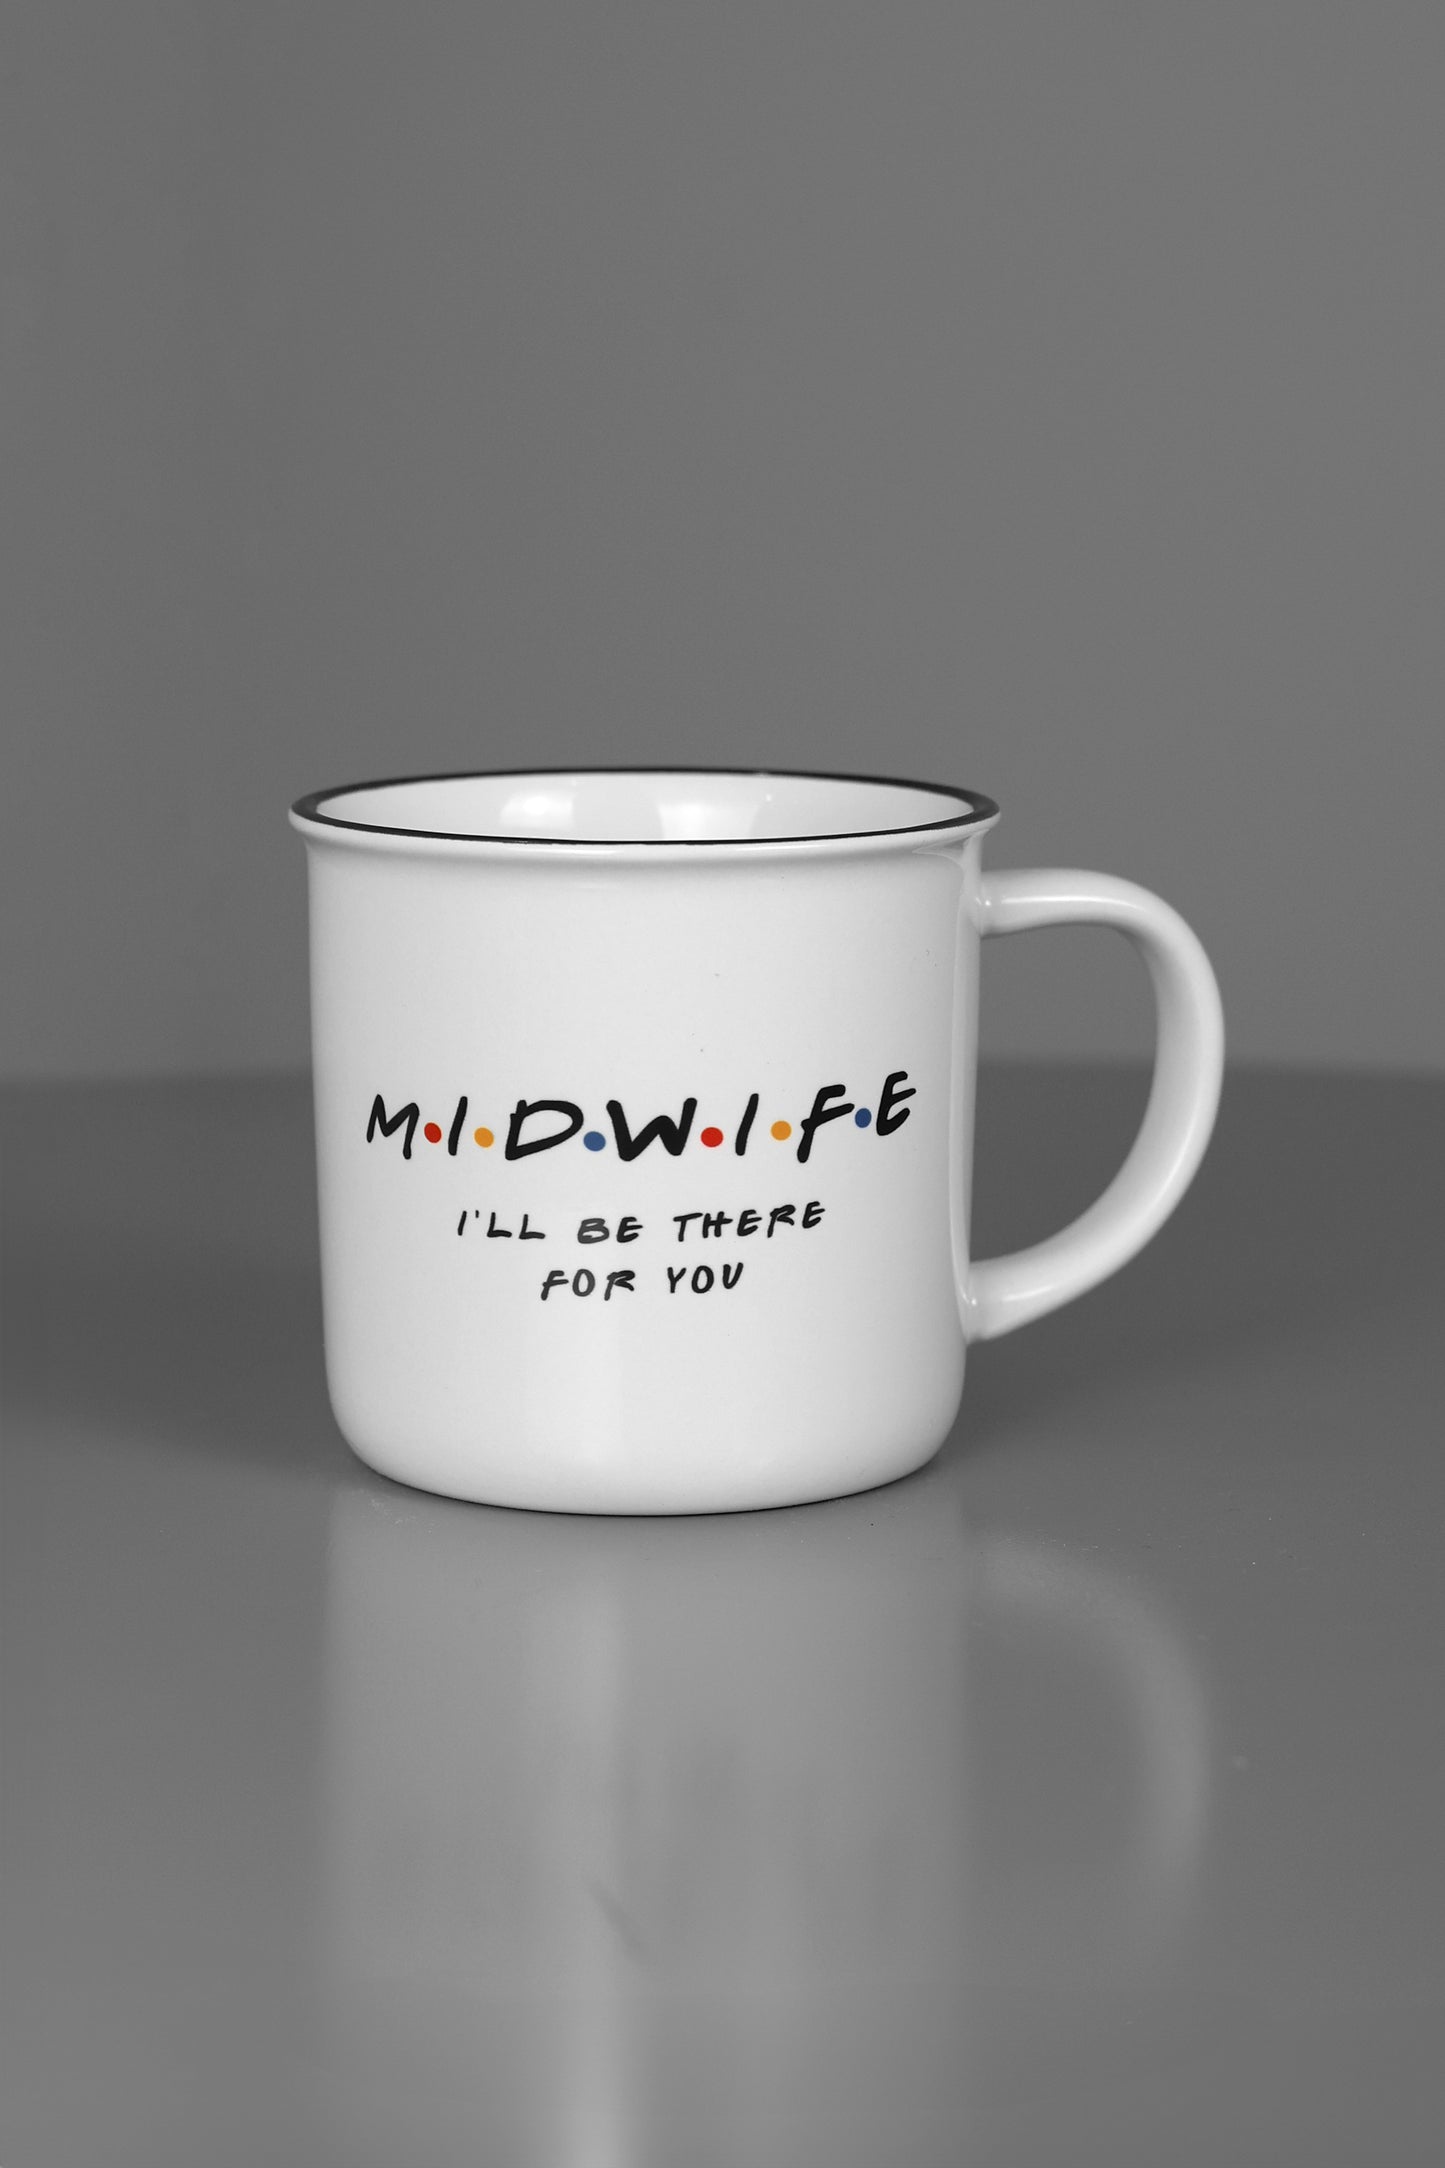 Friends Midwife Ceramic Coffee Mug